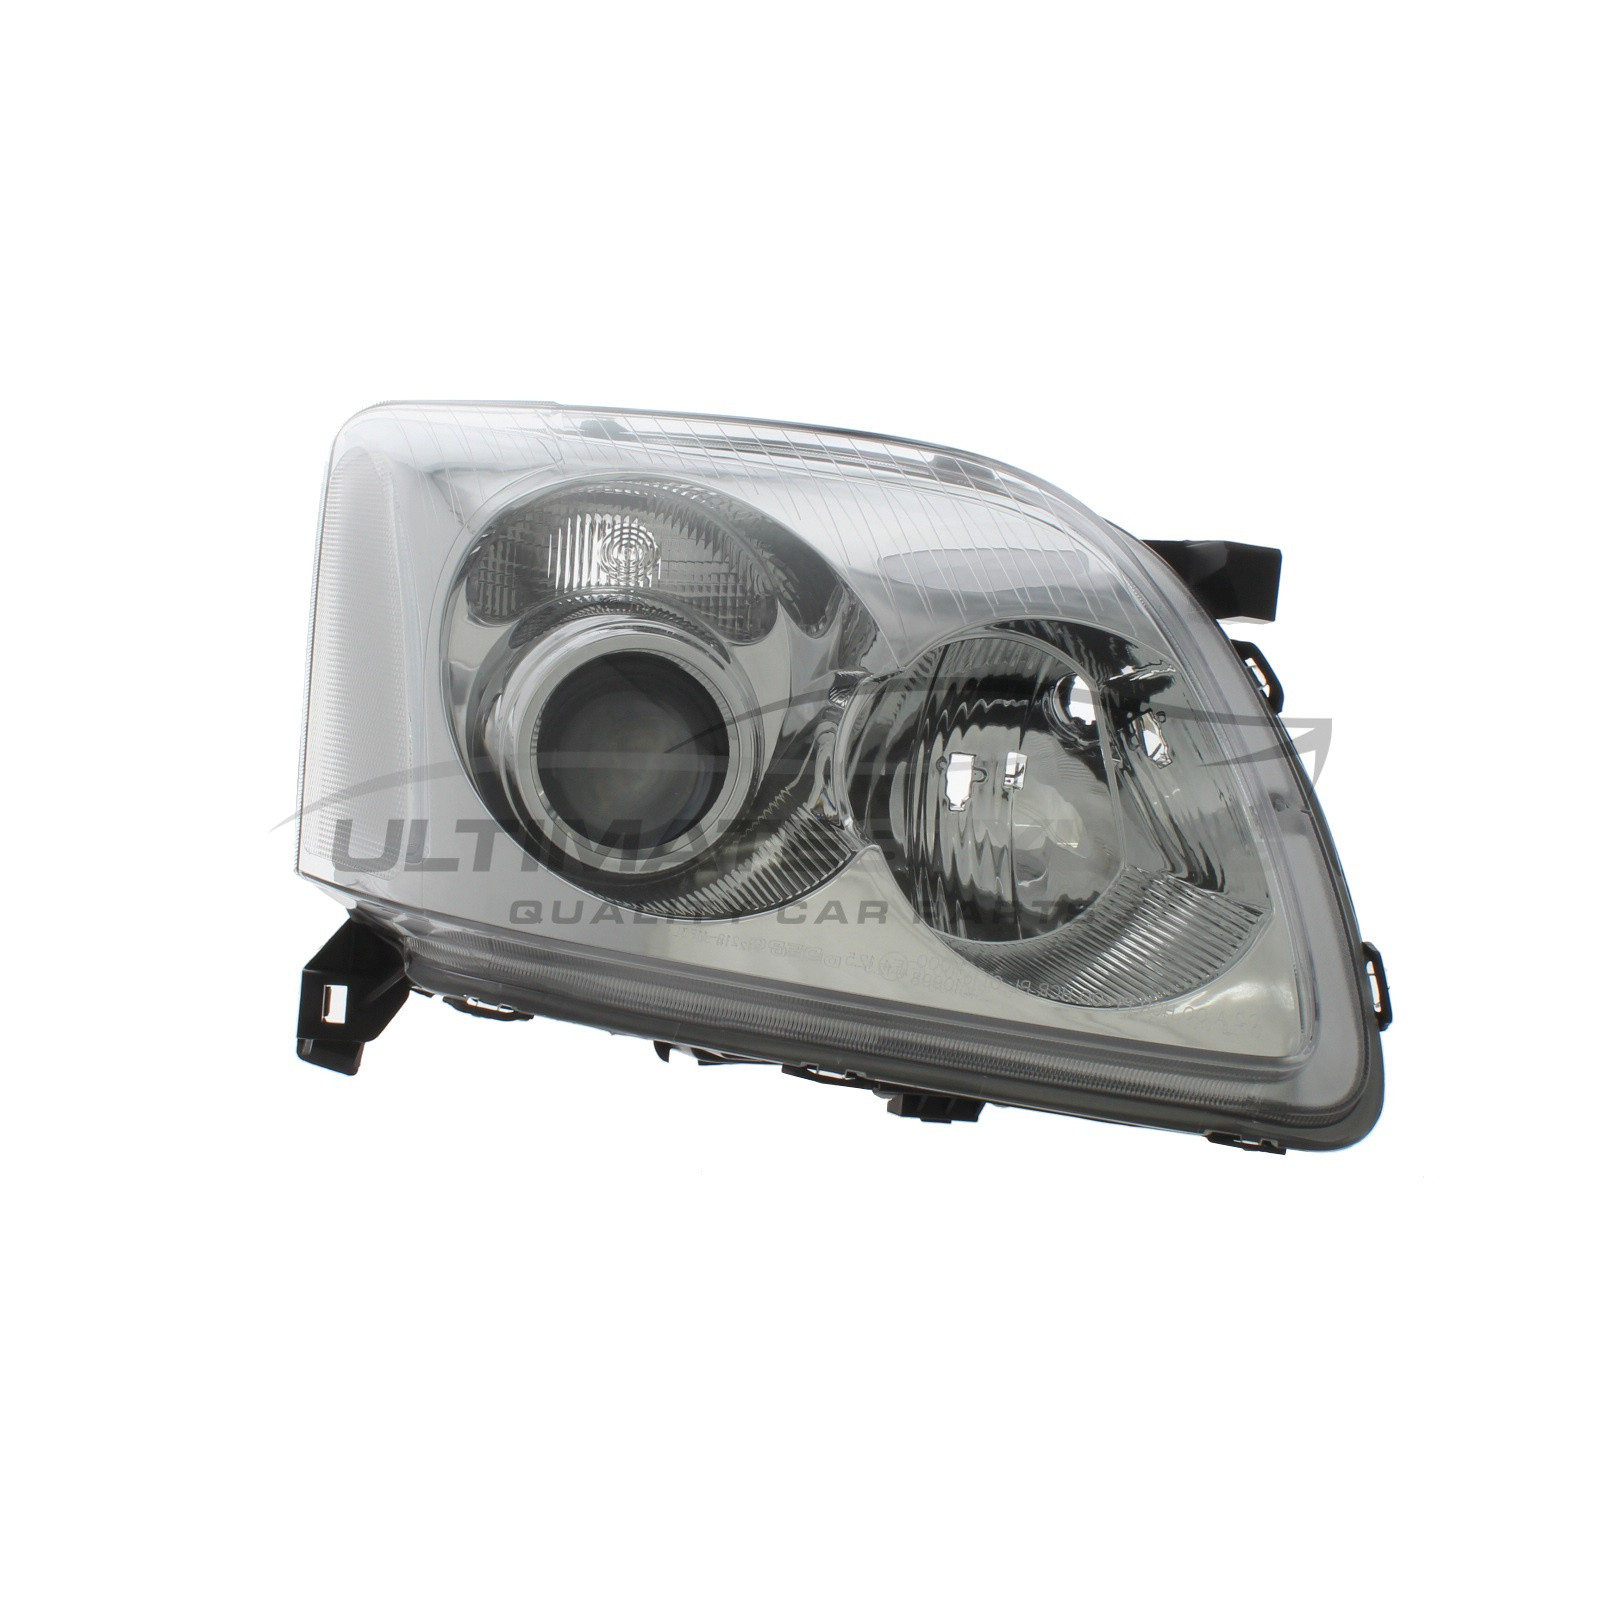 Headlight / Headlamp for Toyota Avensis